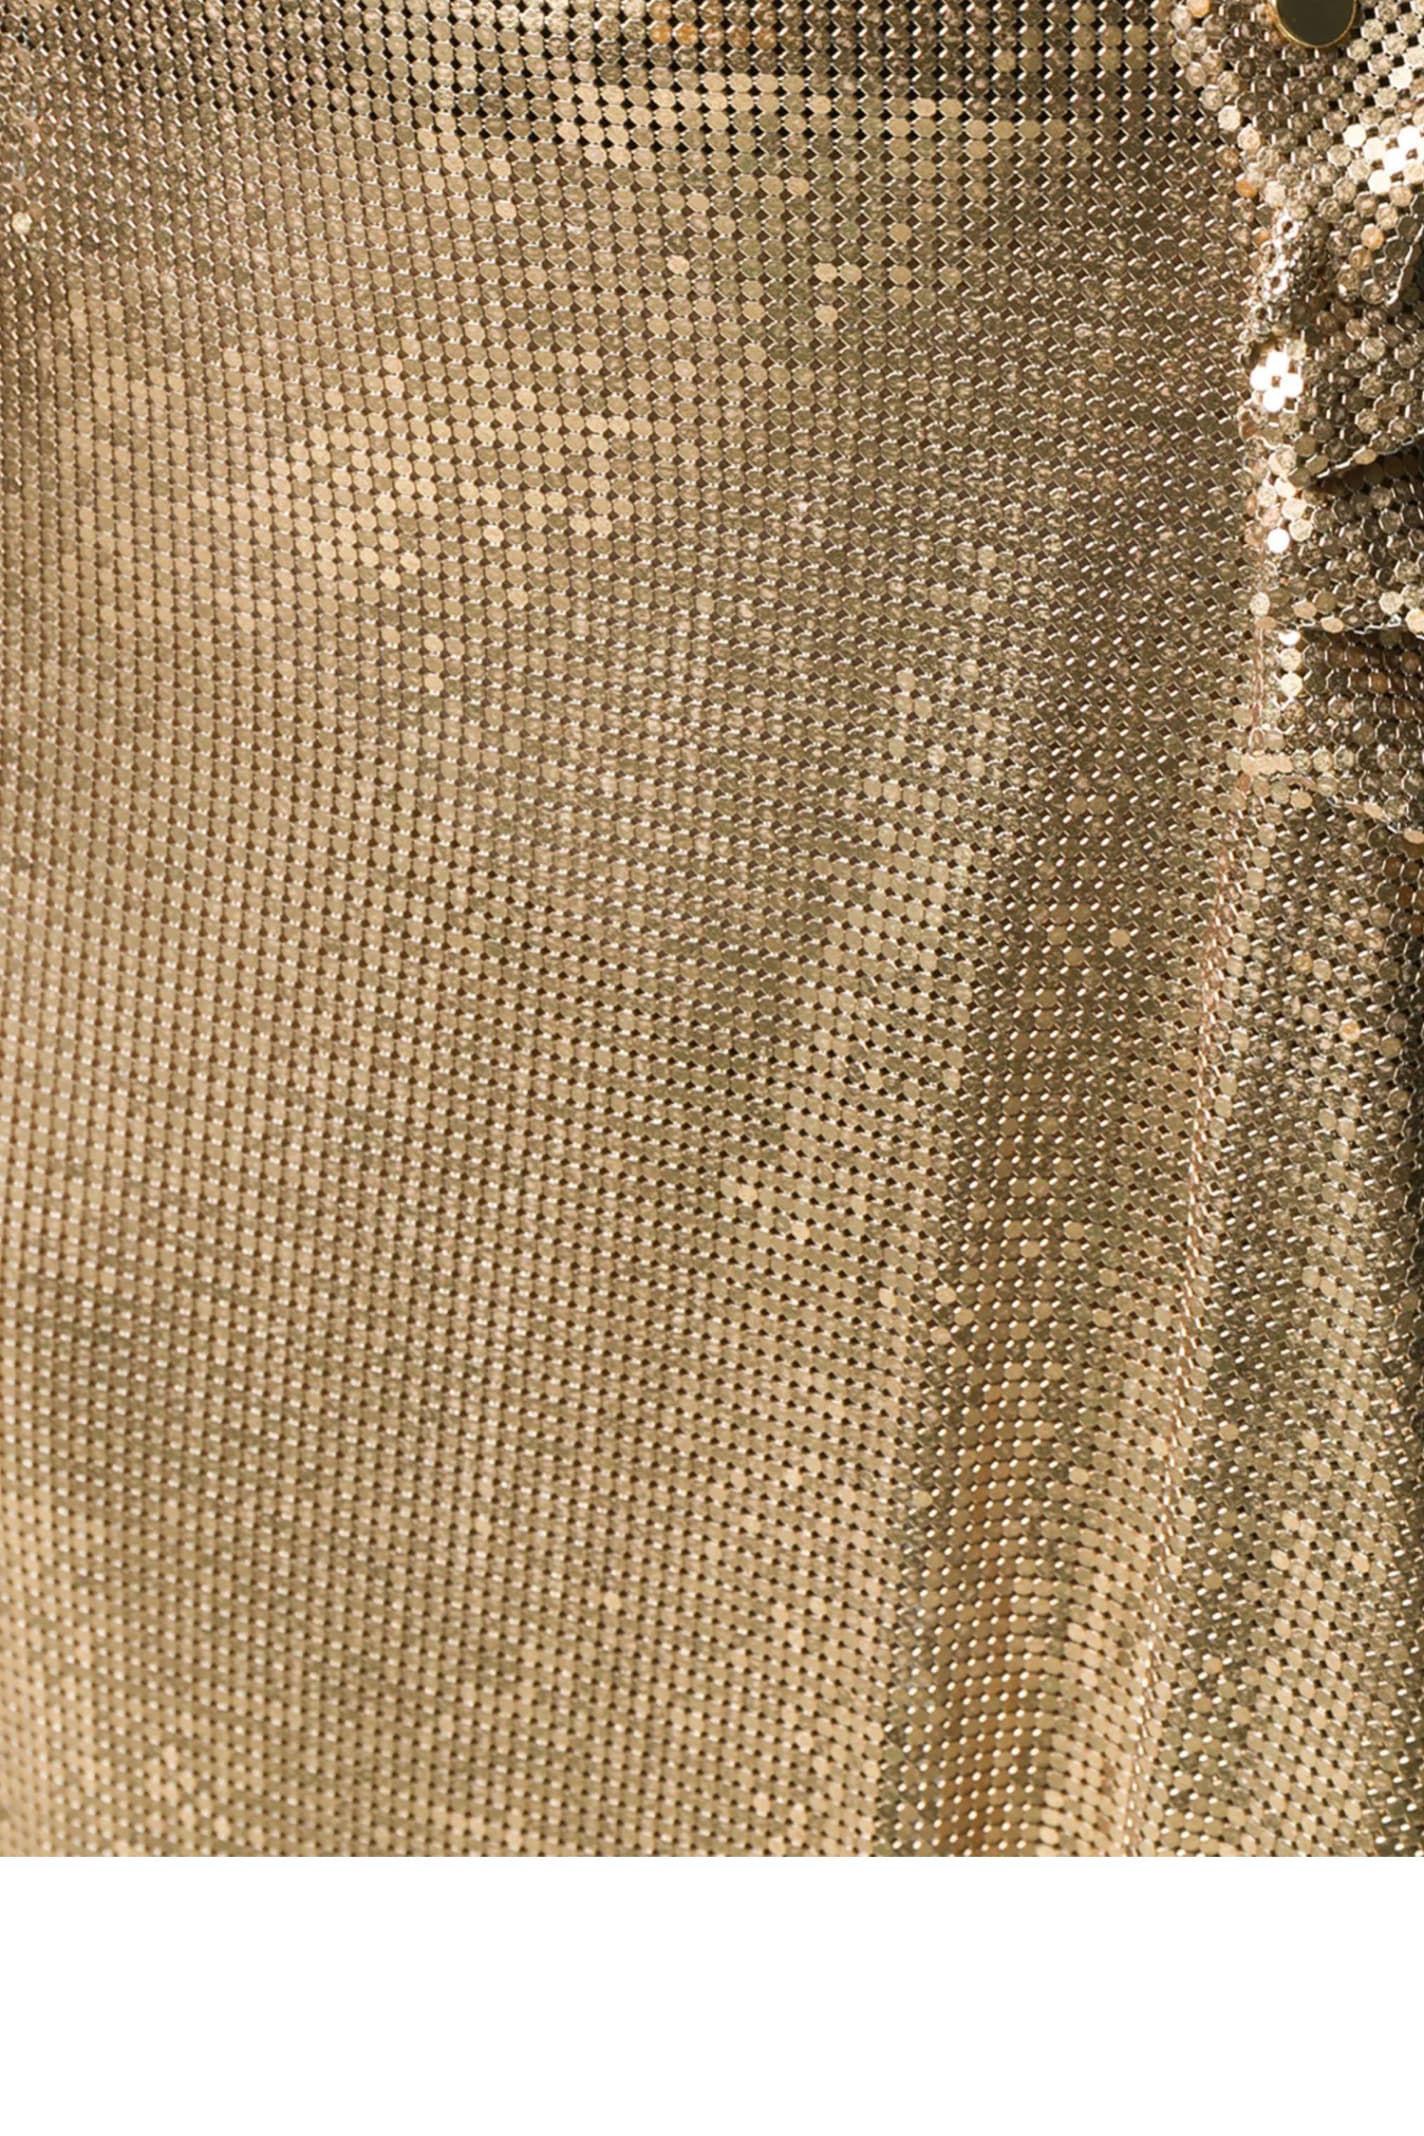 Shop Rabanne Skirt In Golden